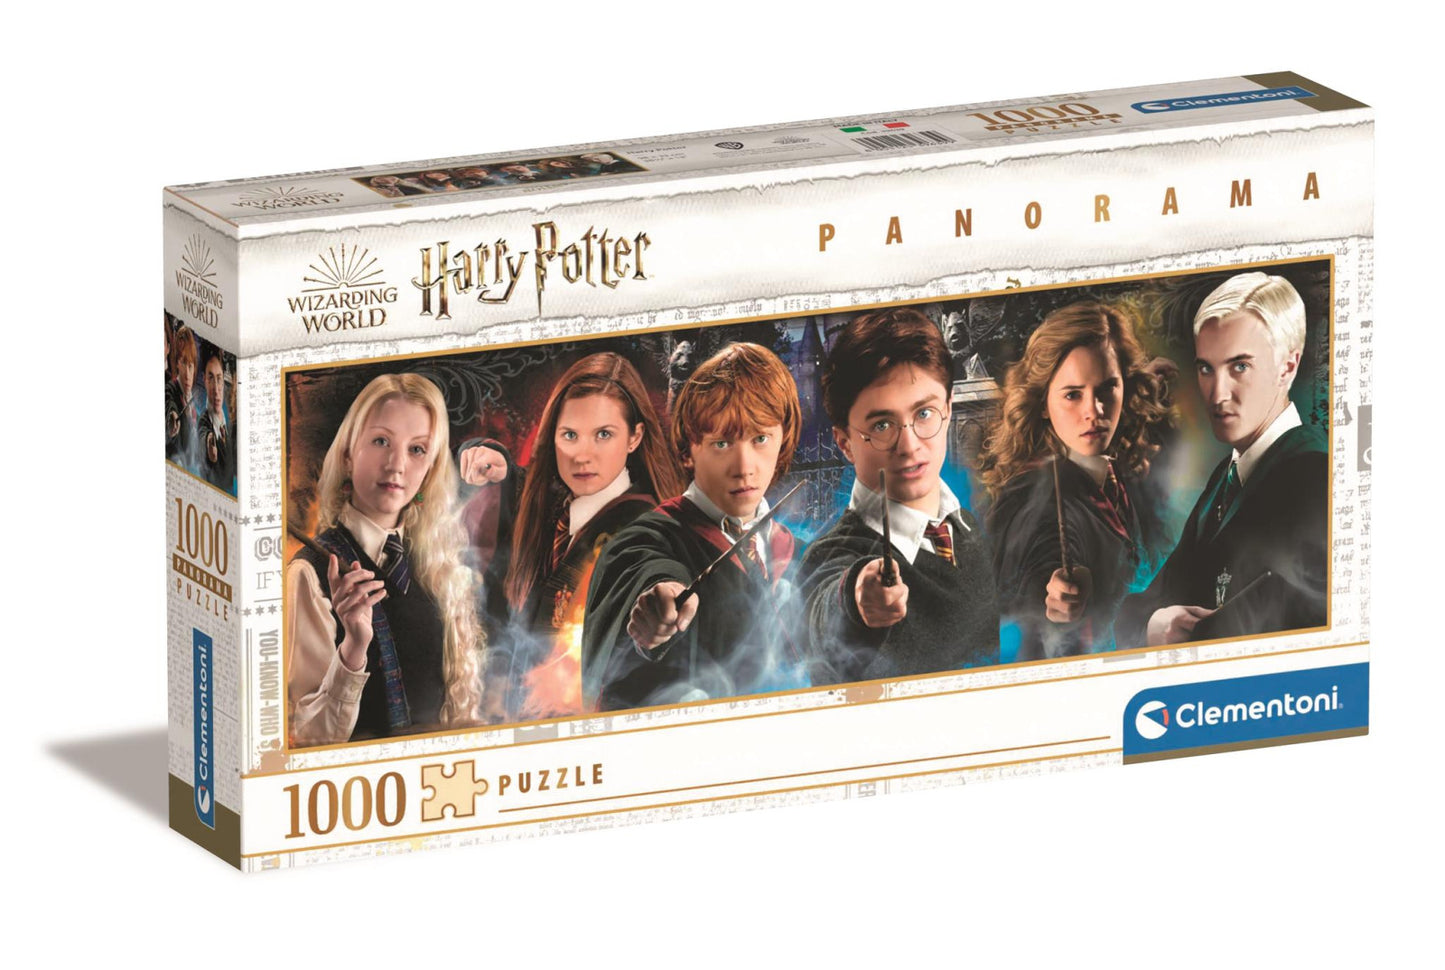 Clementoni Puzzle Panorama Harry Potter 1000 Pieces